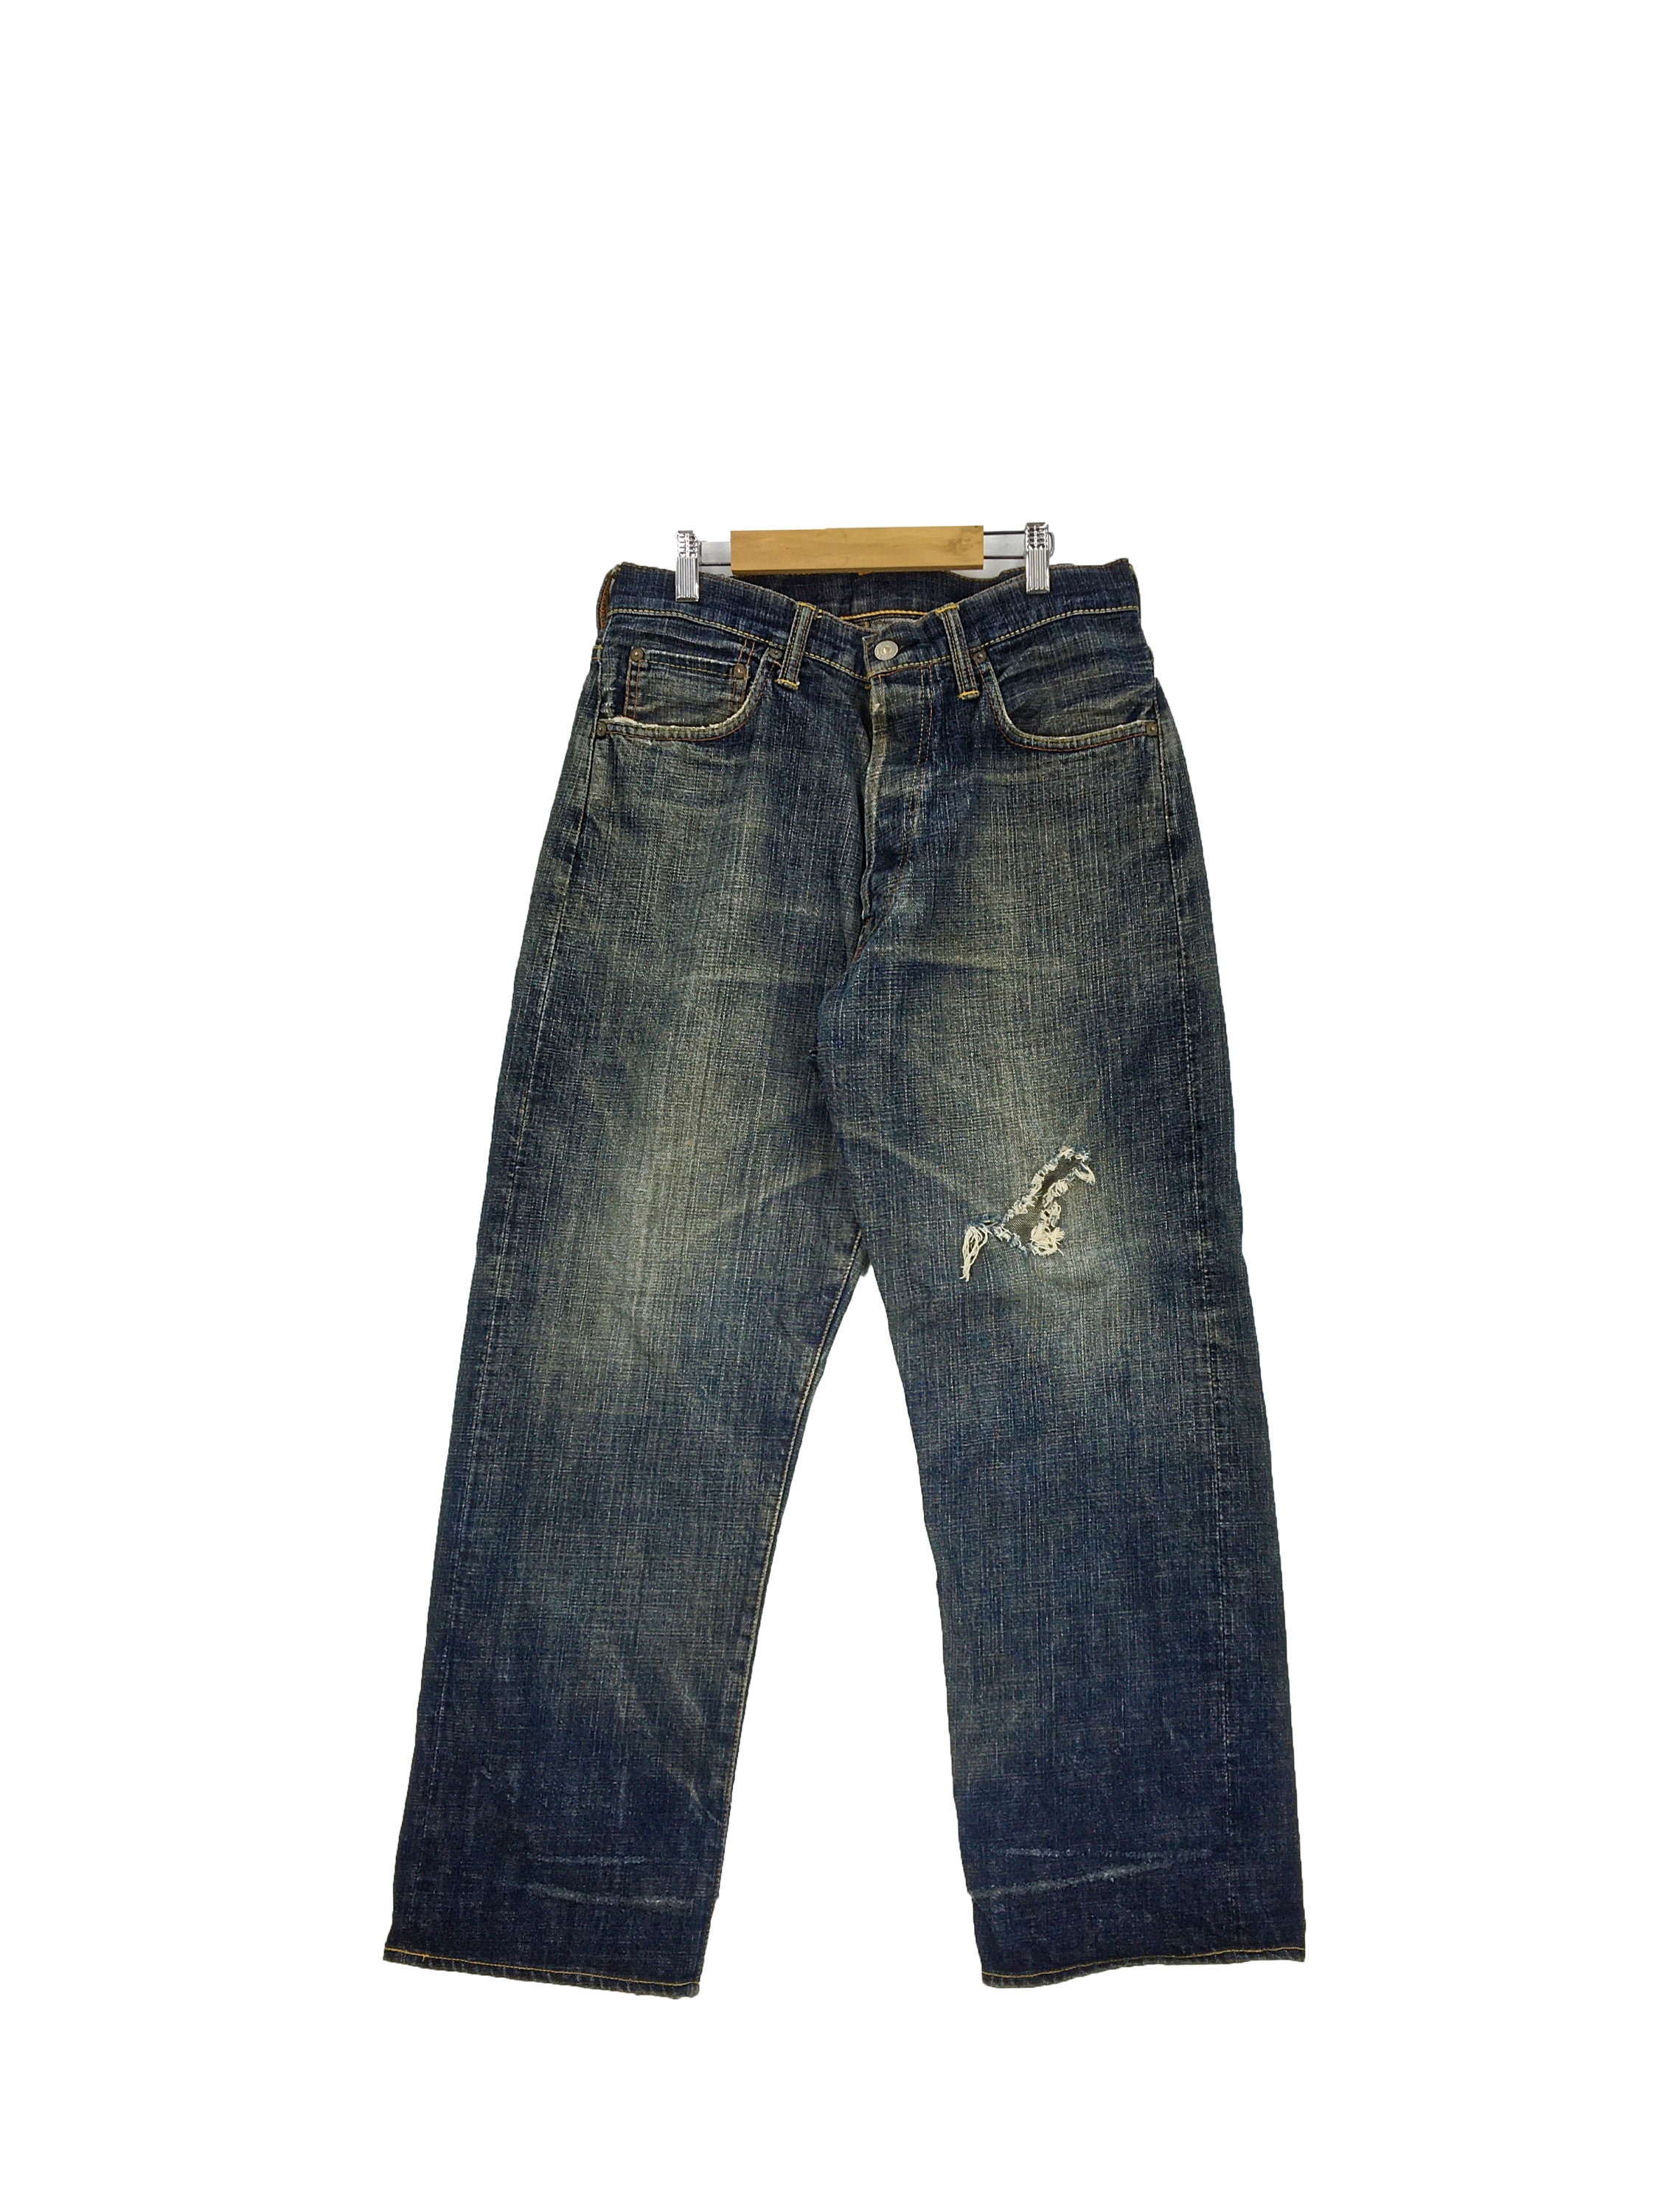 Size 30x28 Vintage Evisu Daicock Selvedge Jeans 90s Japan Evisu 